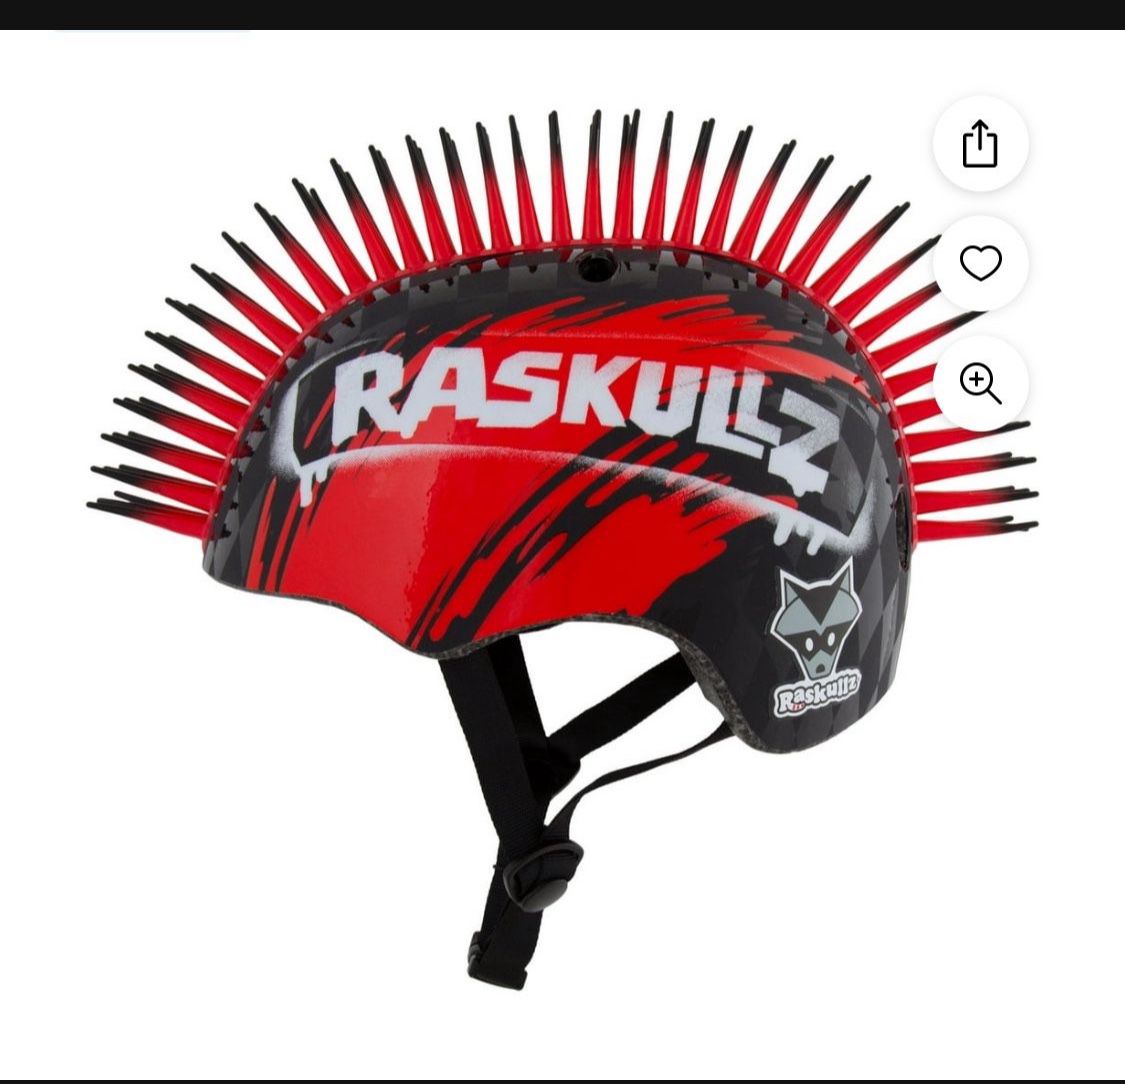 Raskullz Hawk Mohawk Black Bike Helmet, Child 5+ (50-54cm)